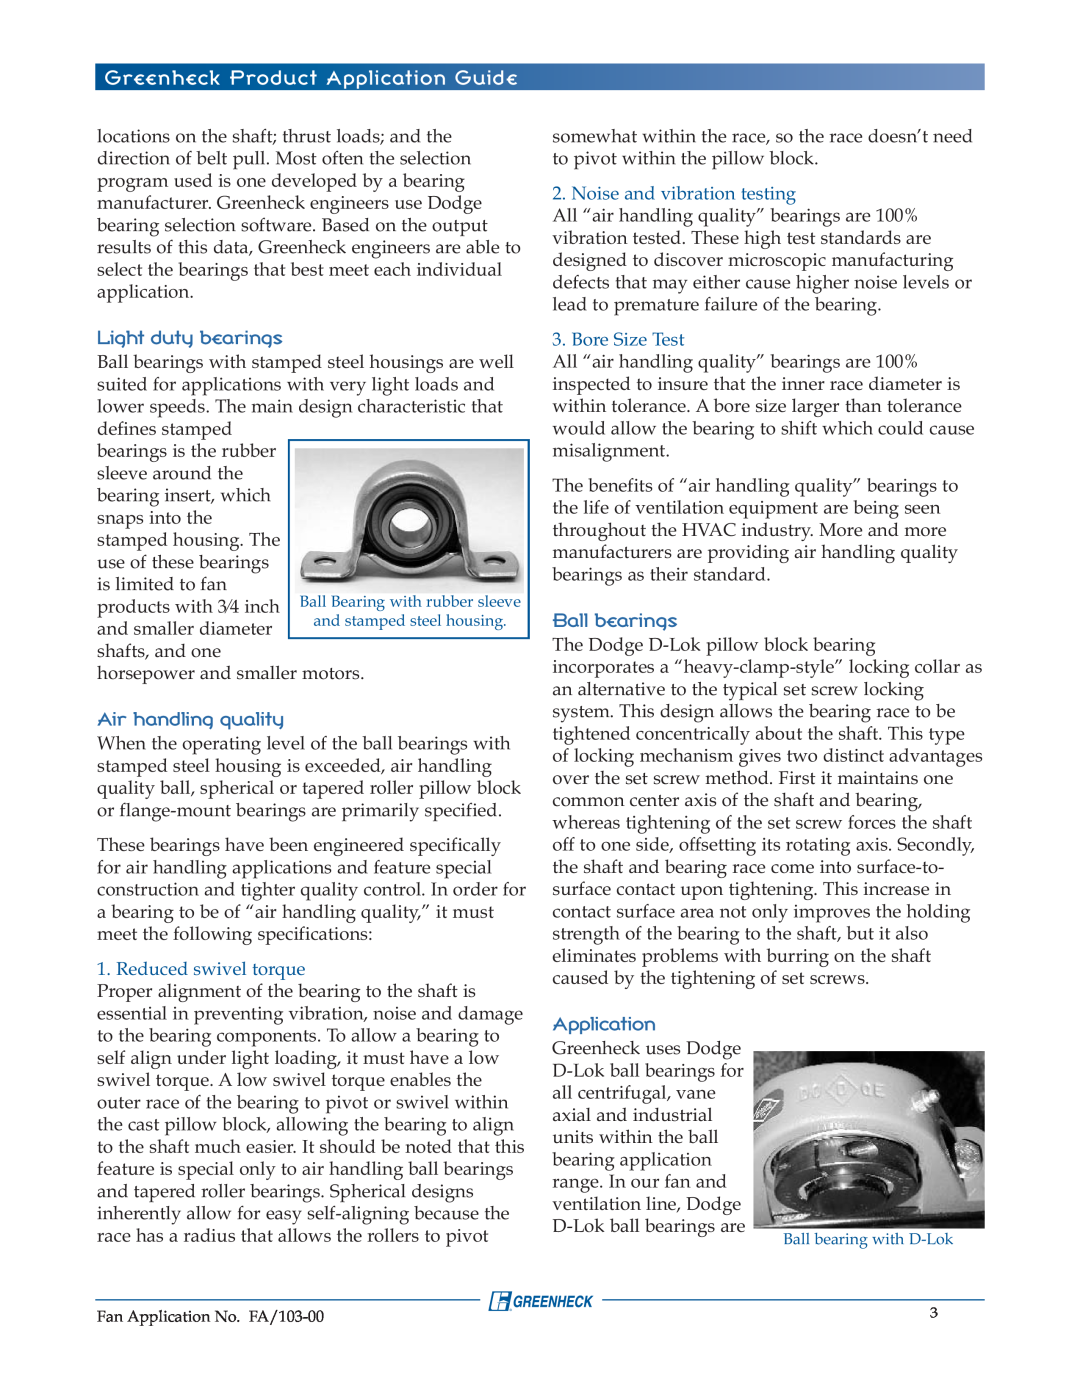 Greenheck Fan FA/103-00 manual Light duty bearings, Air handling quality, Ball bearings, Application, Reduced swivel torque 